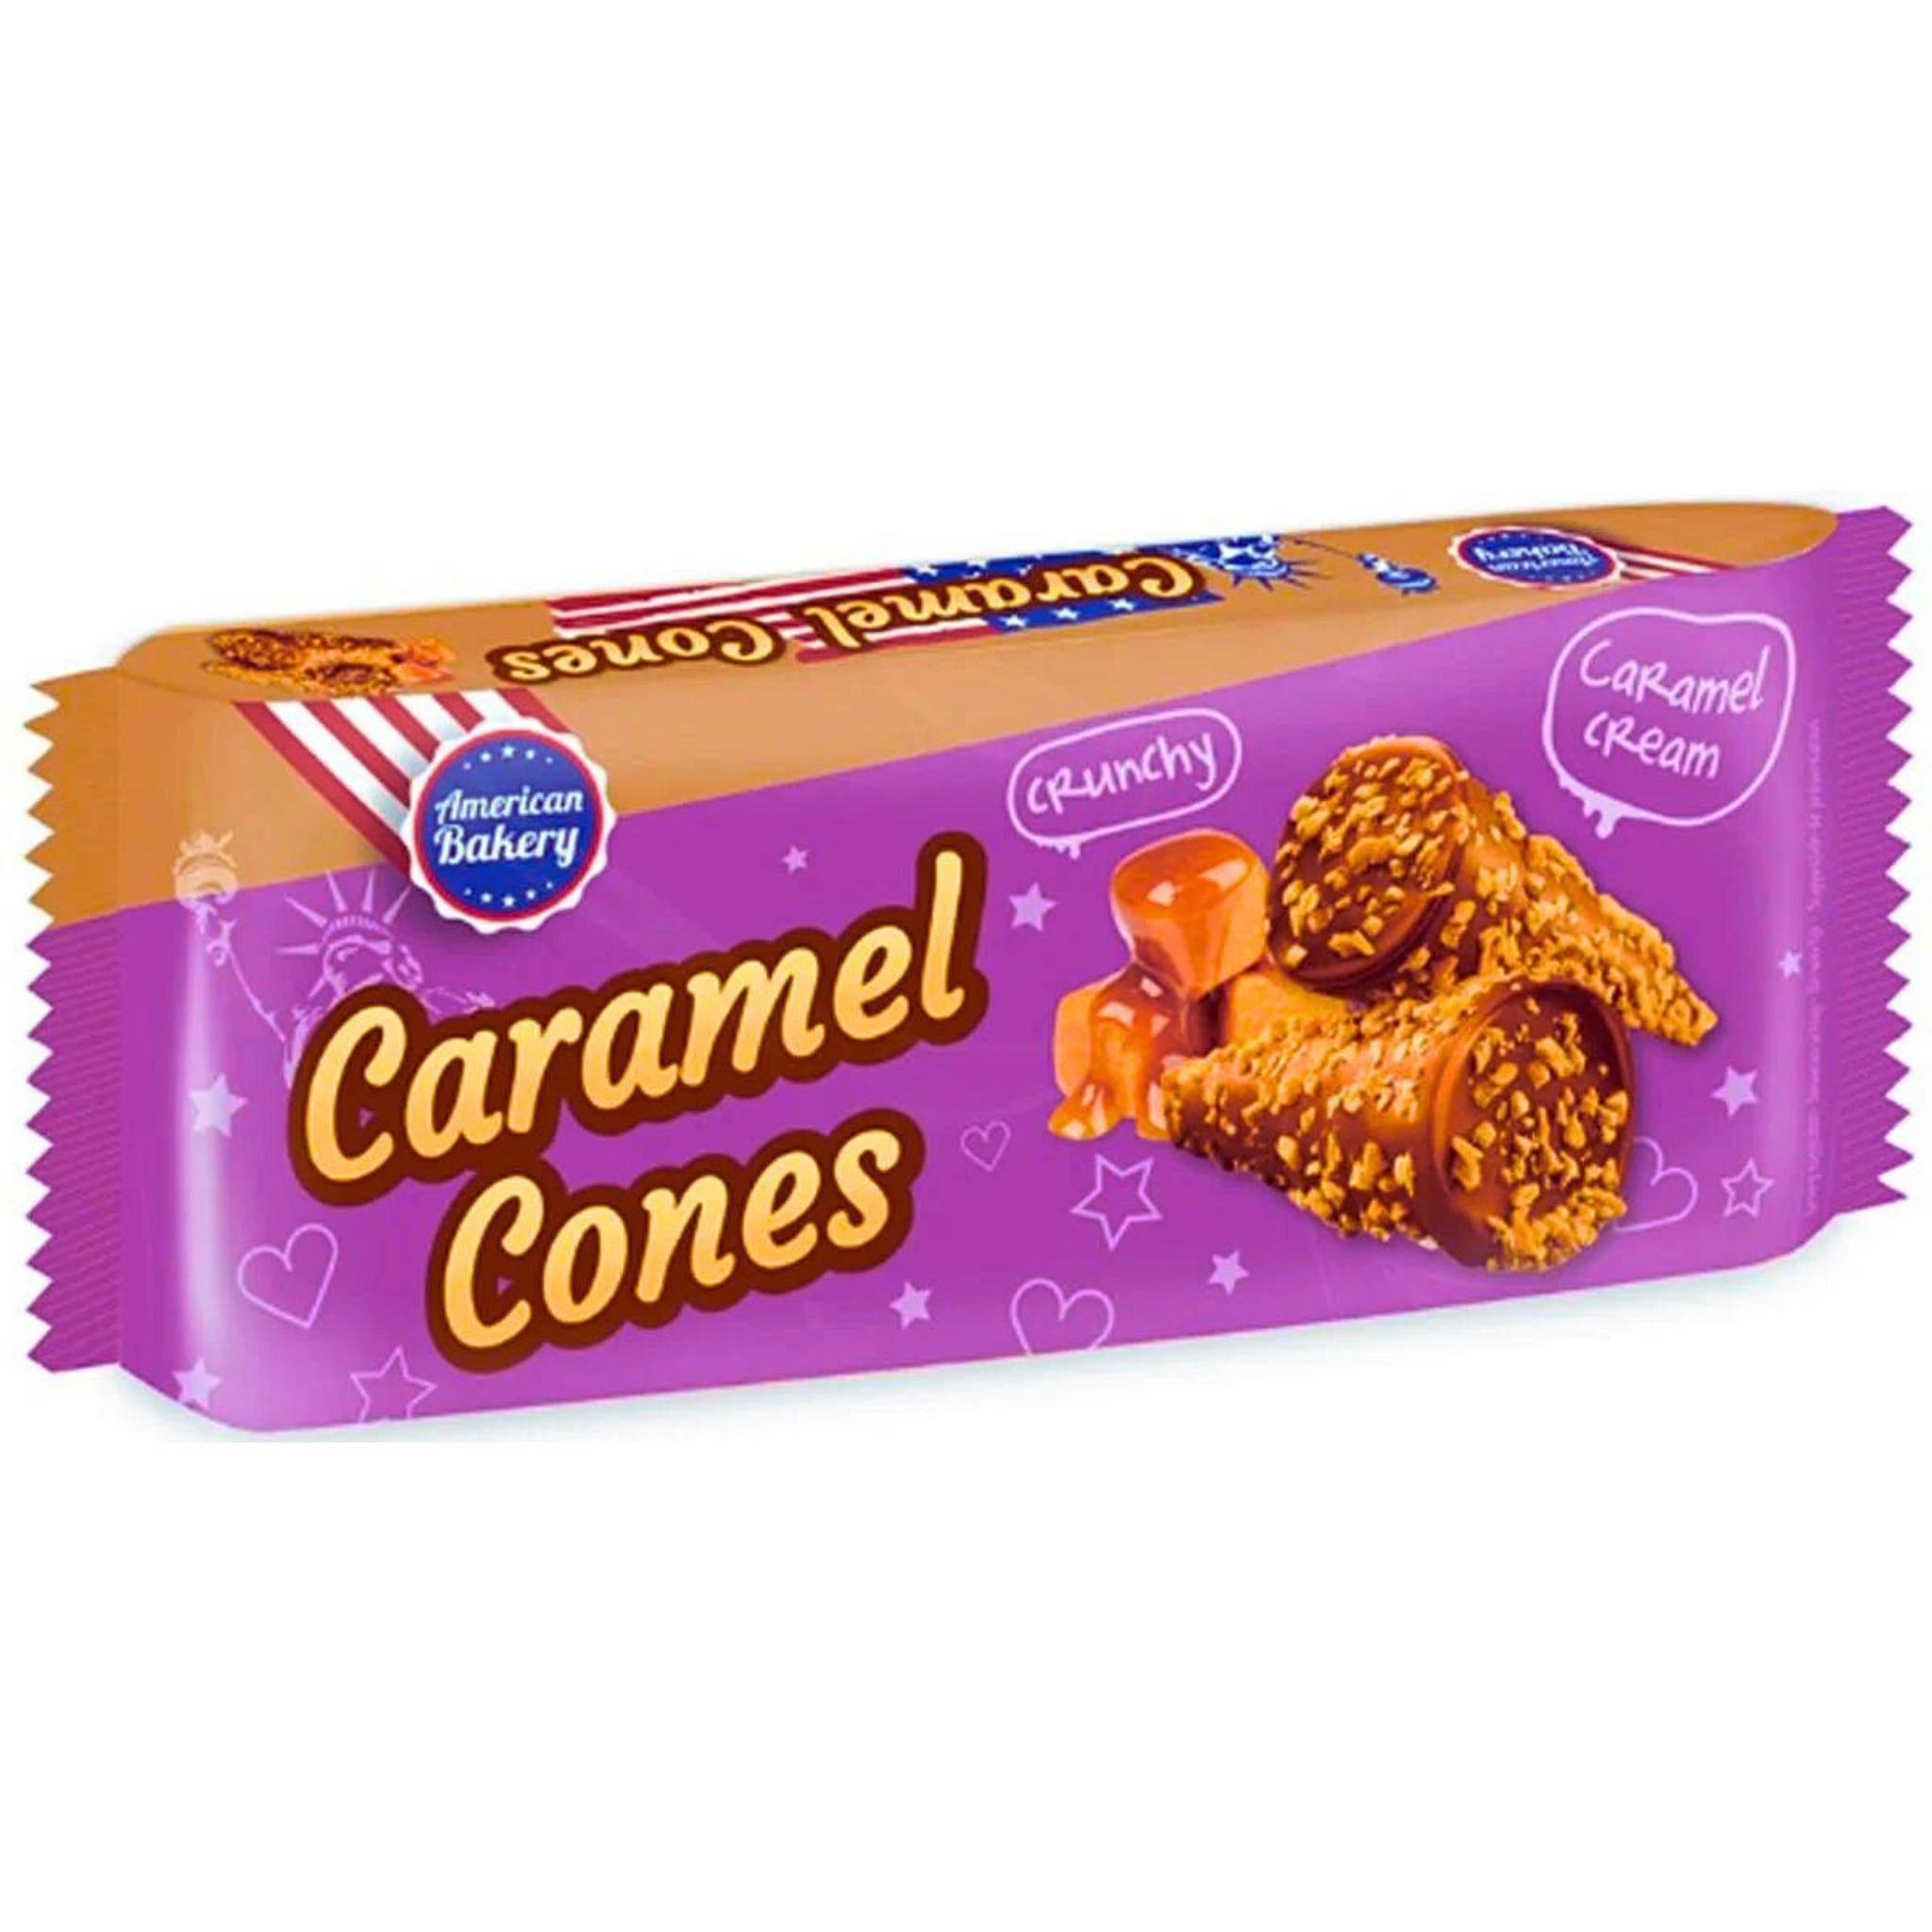 American Bakery Caramel Cones - 112g